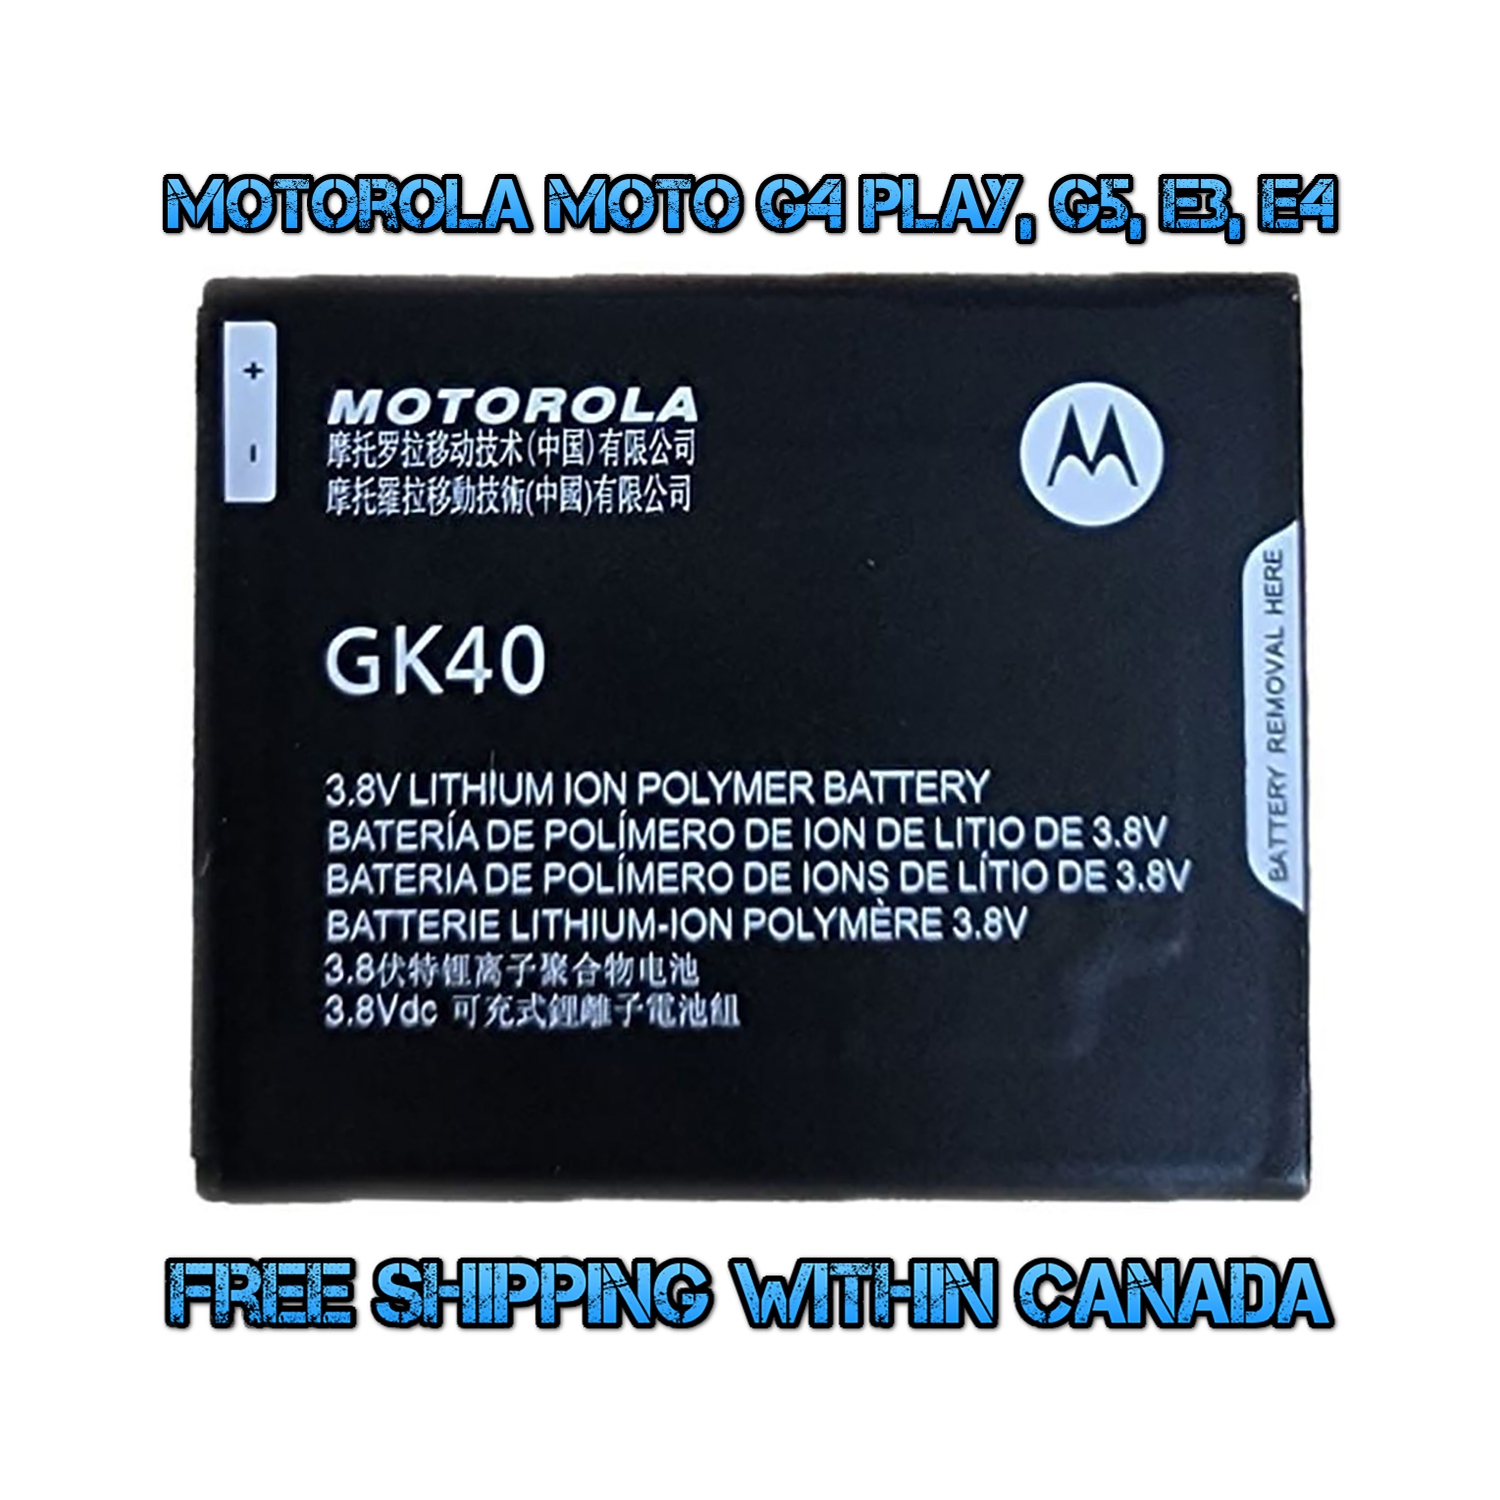 New OEM Replacement Battery Model GK40 2800 mAh for Motorola Moto G4 Play / G5 / E4 / E3 XT1607 XT1609 - (FREE SHIPPING)